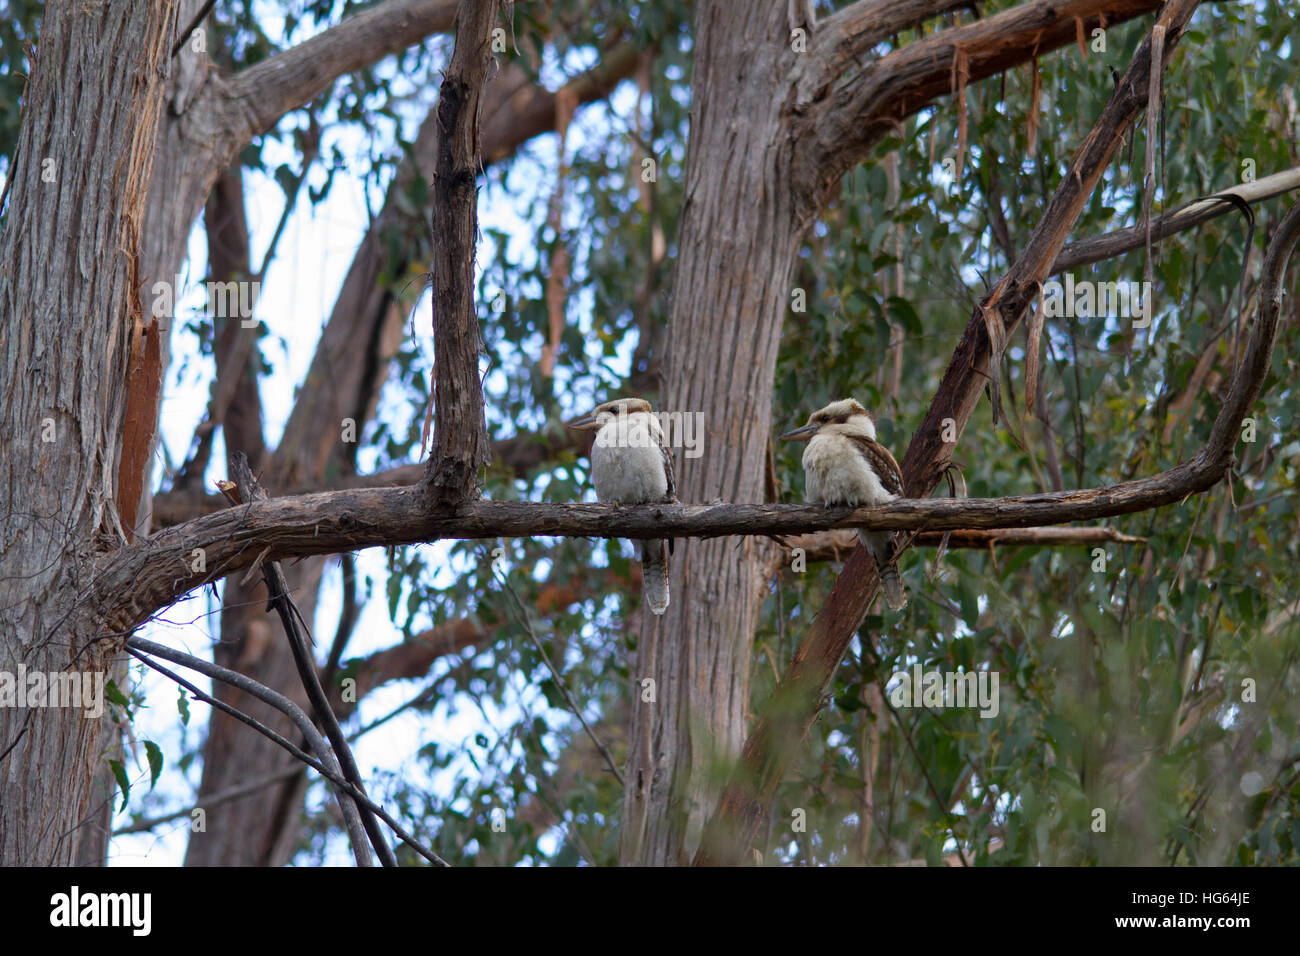 Two Laughing Kookaburras (Dacelo novaeguineae) perched in a tree Stock Photo